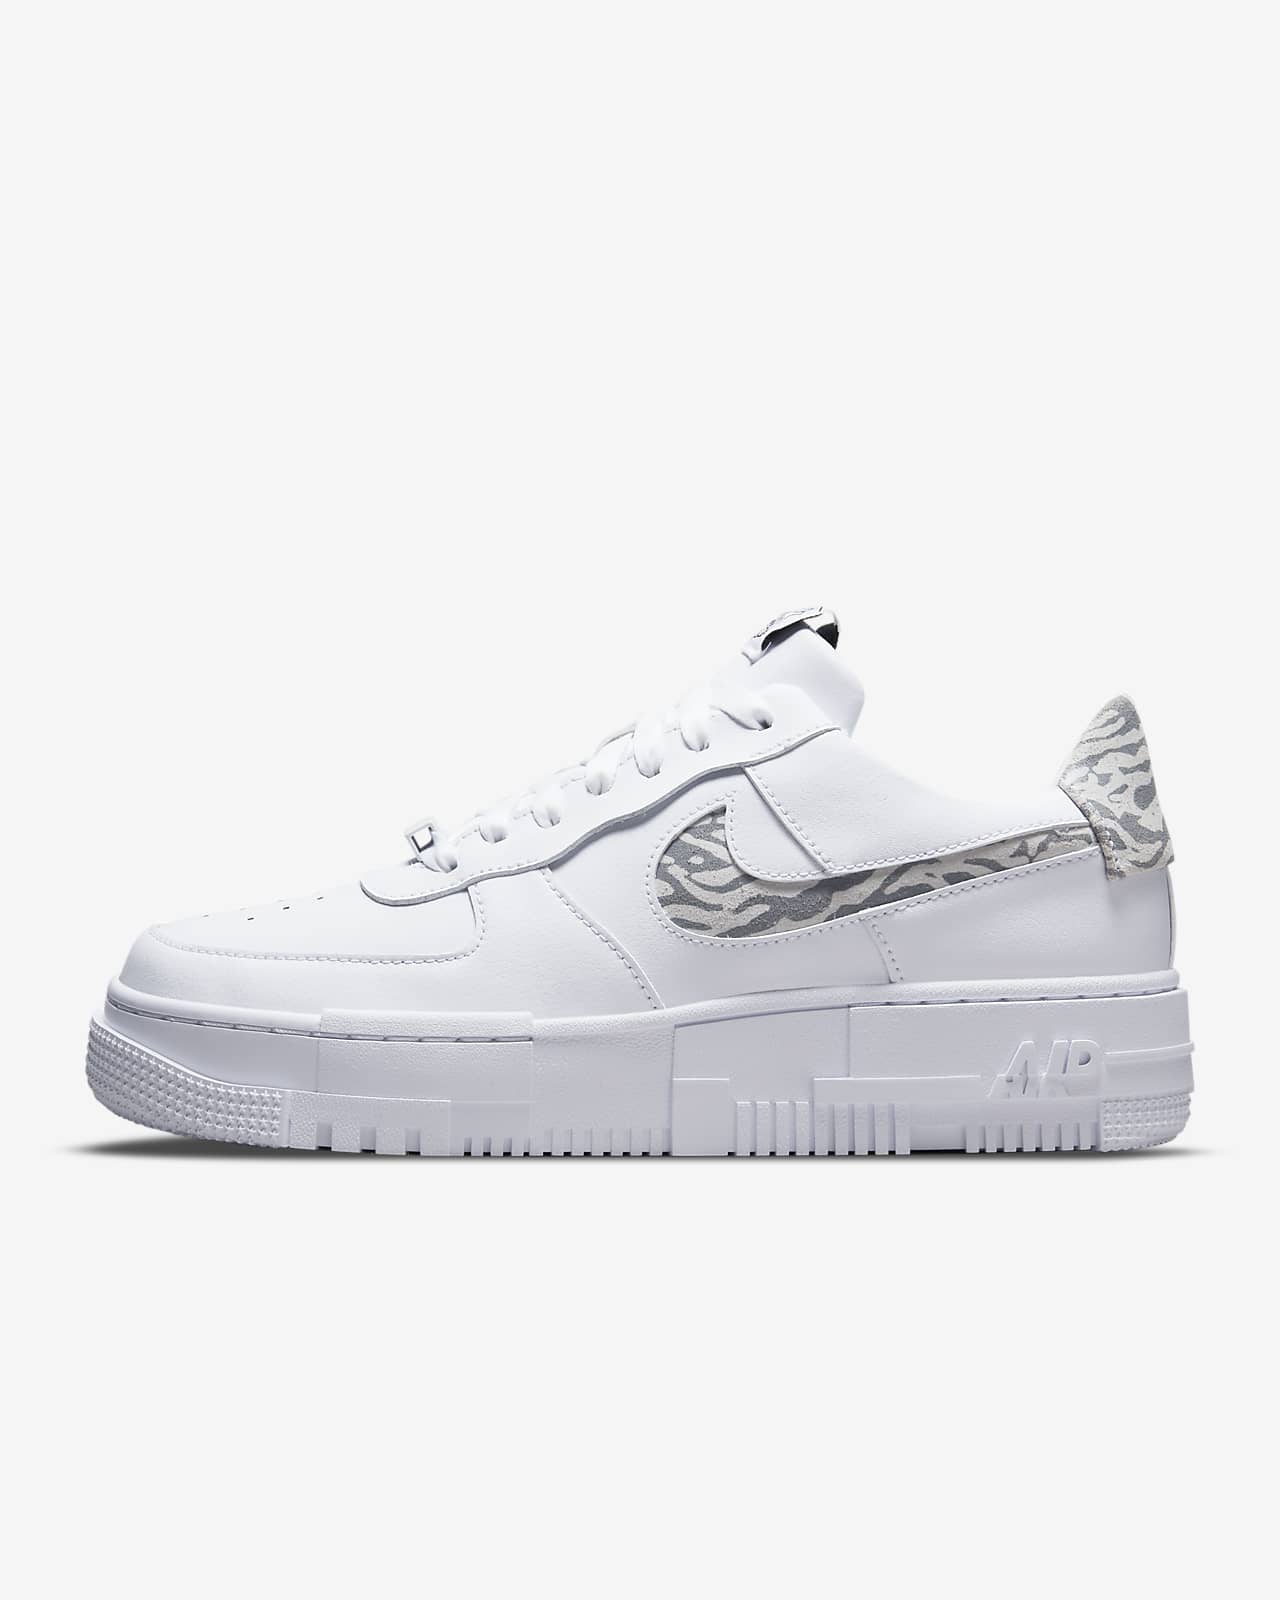 Chaussures Nike Air Force 1 Pixel SE pour Femme